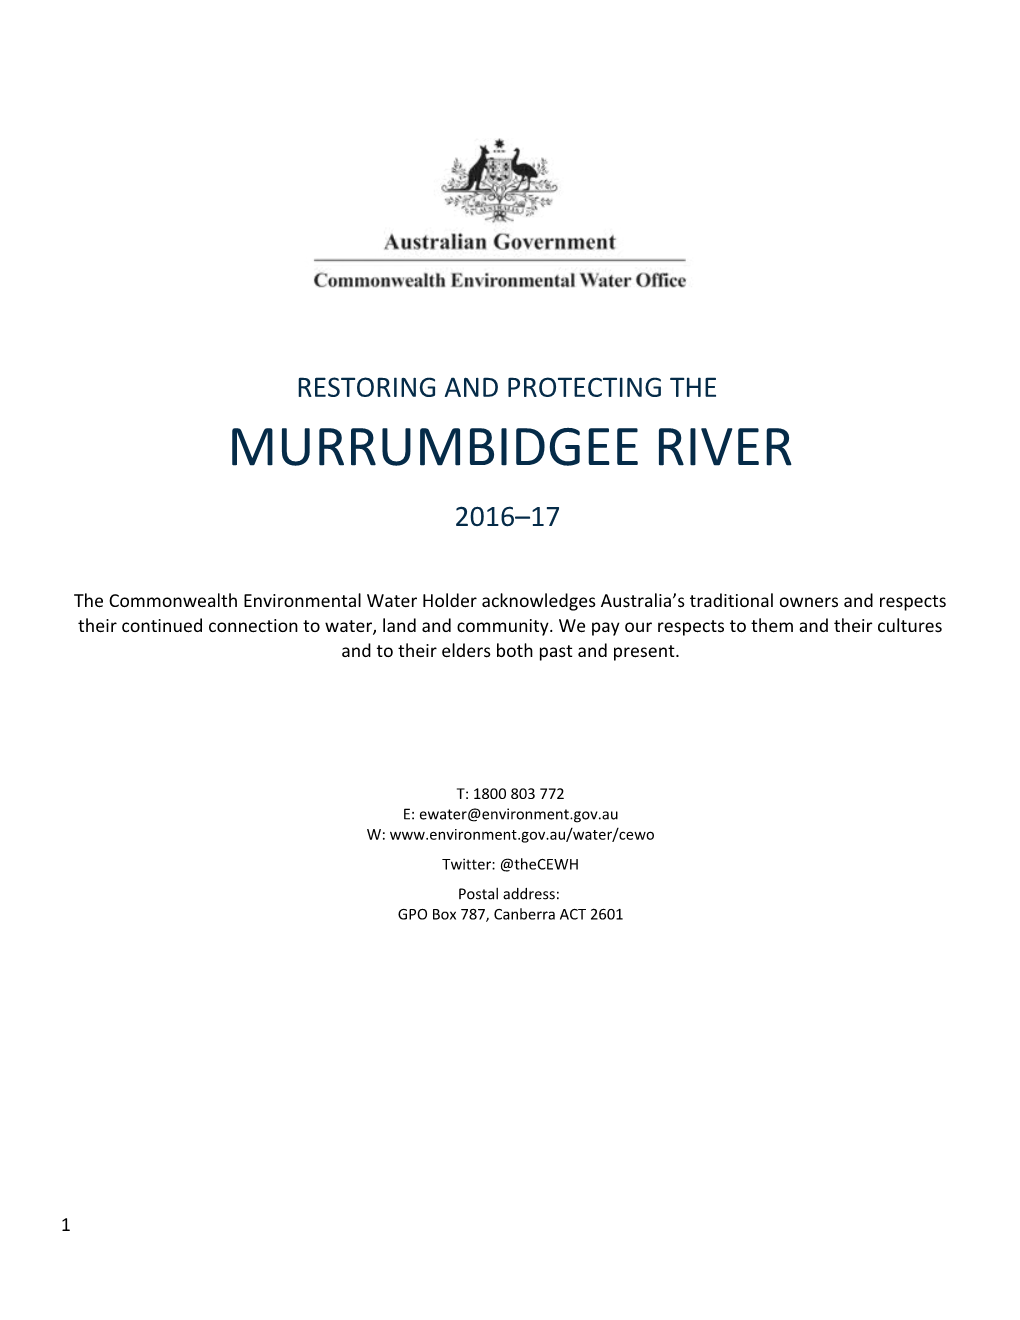 Restoring and Protecting the Murrumbidgee River 2016-17